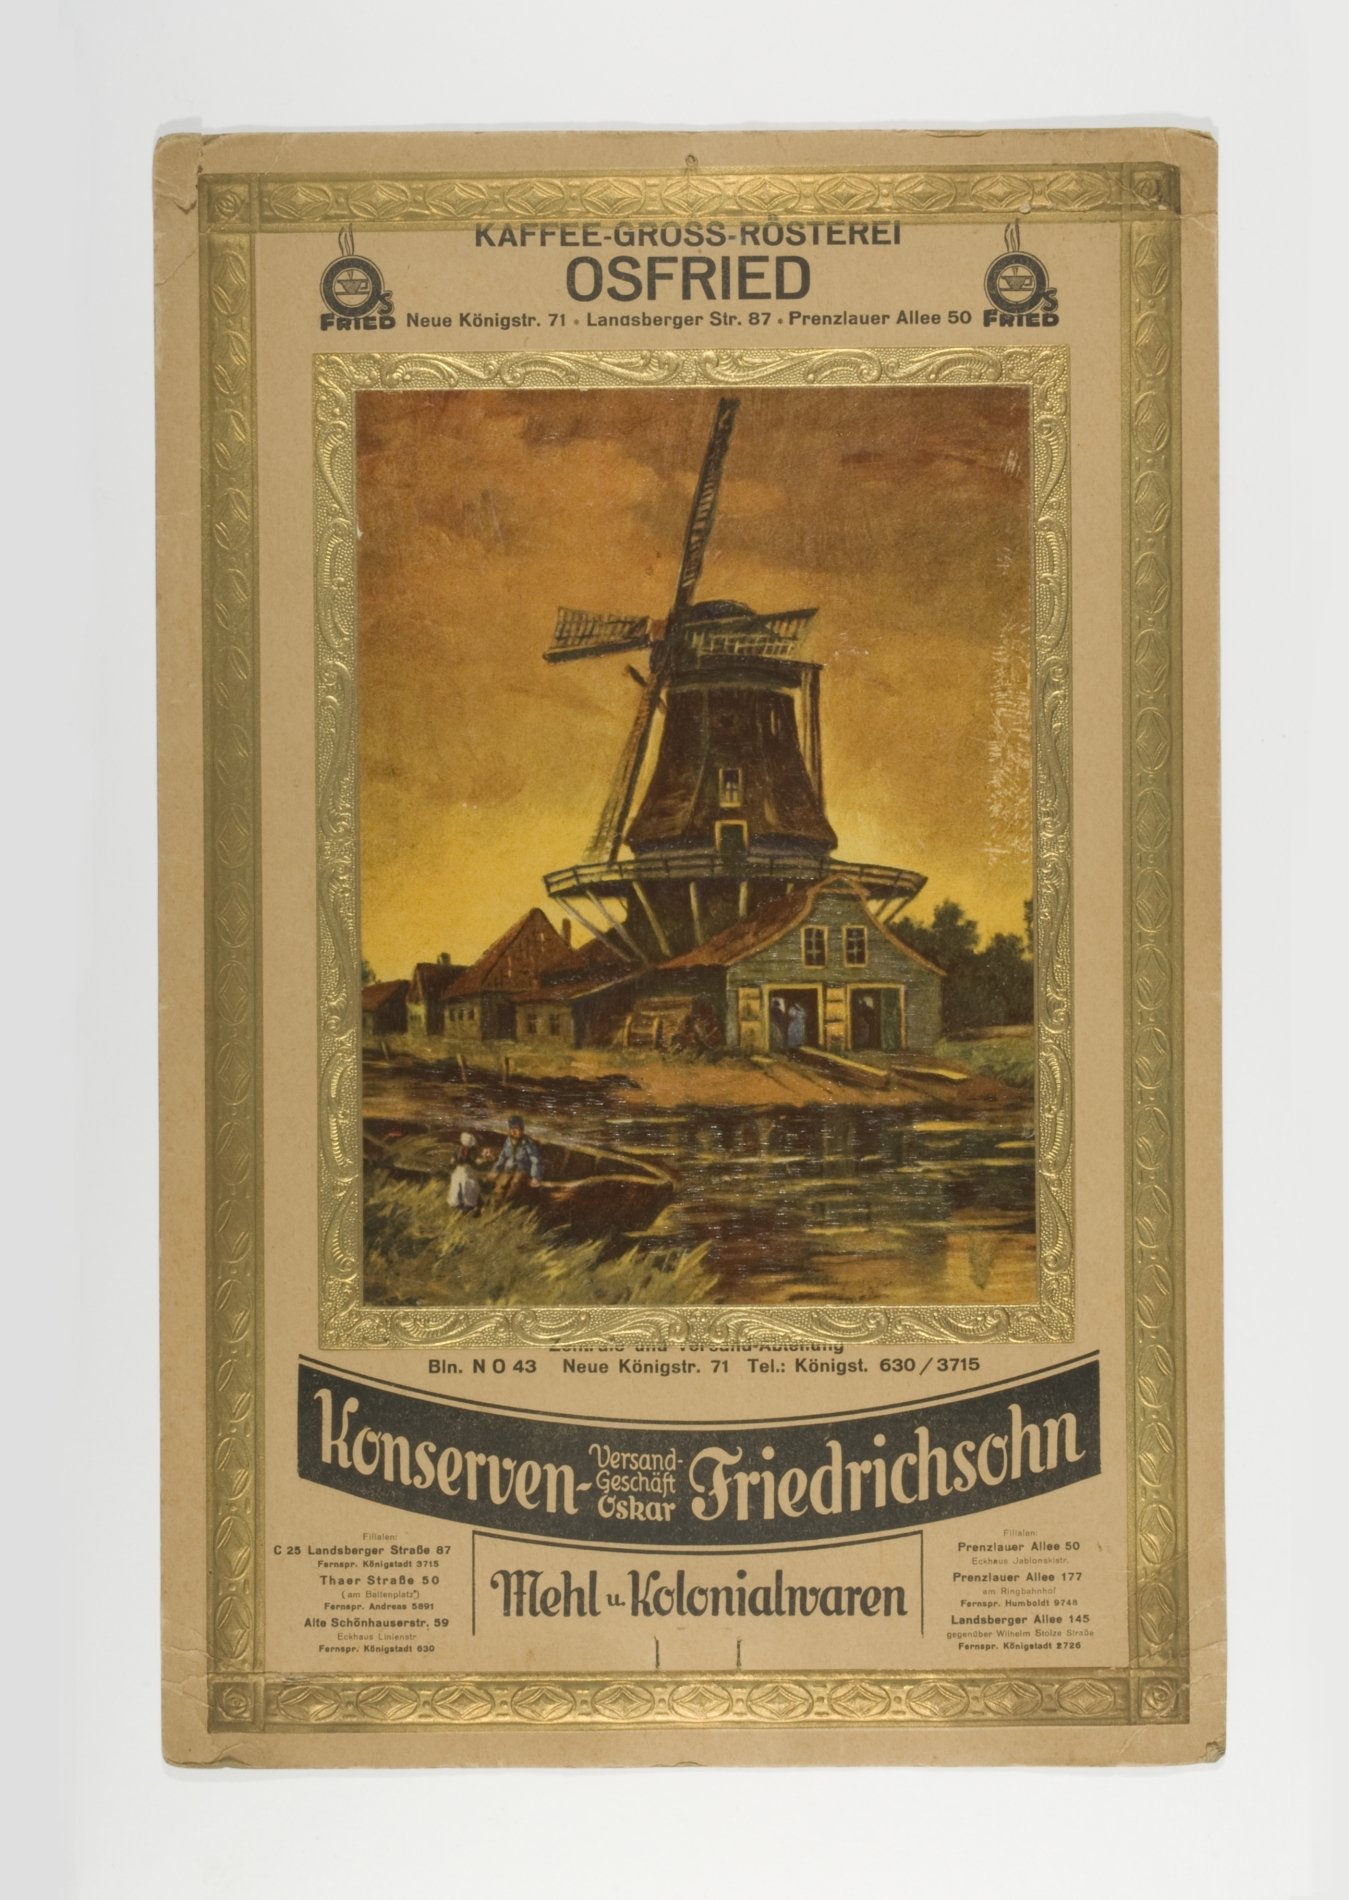 Werbeschild "Kaffee Gross-Rösterei Osfried - Konserven Oskar Friedrichsohn" (Stiftung Domäne Dahlem - Landgut und Museum, Weiternutzung nur mit Genehmigung des Museums CC BY-NC-SA)